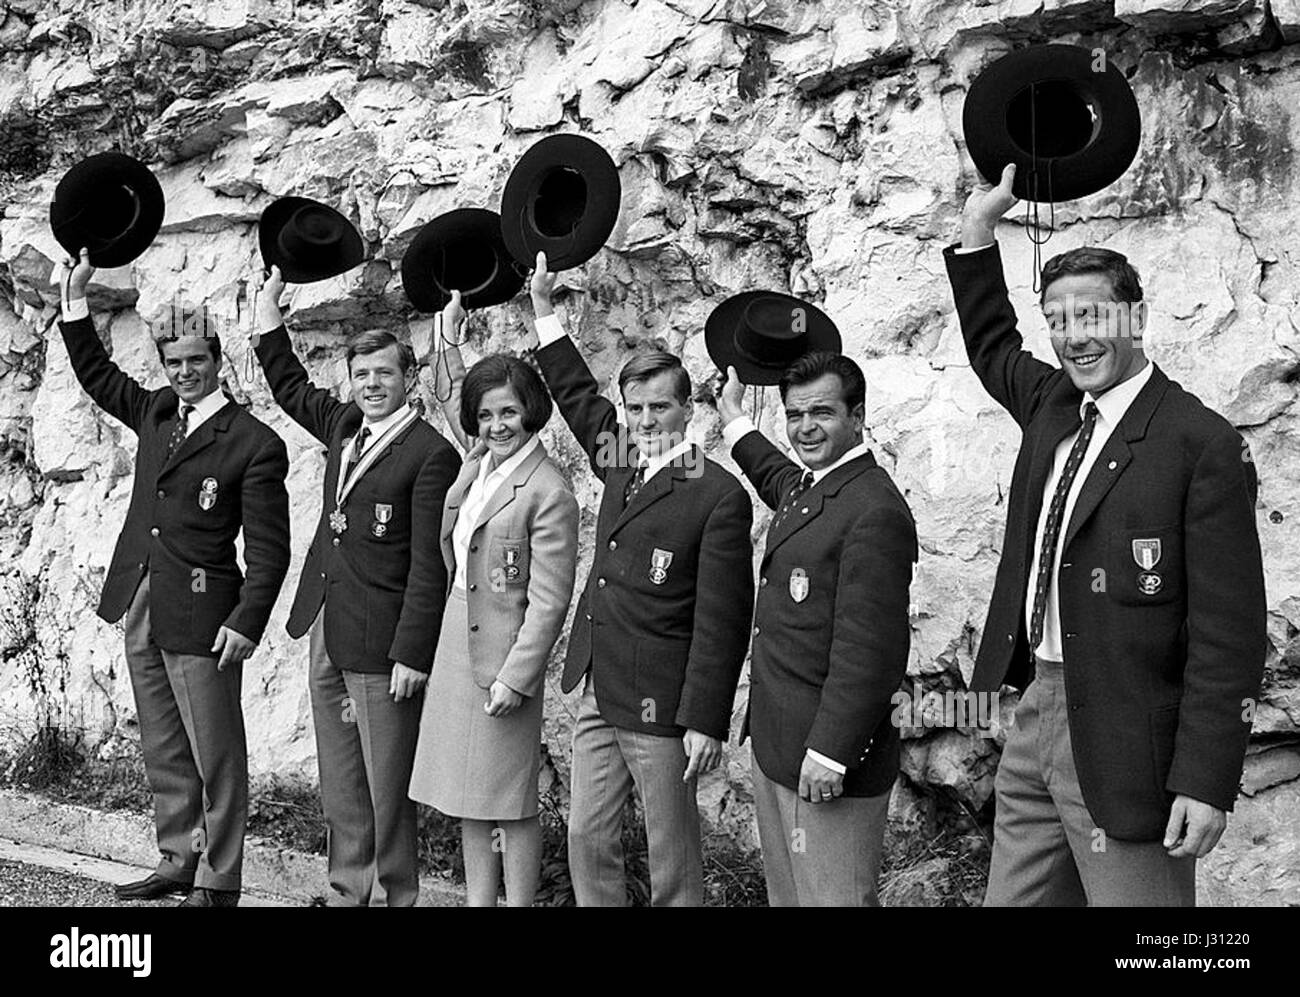 Italian Alpine Ski Team 1966 Stock Photo